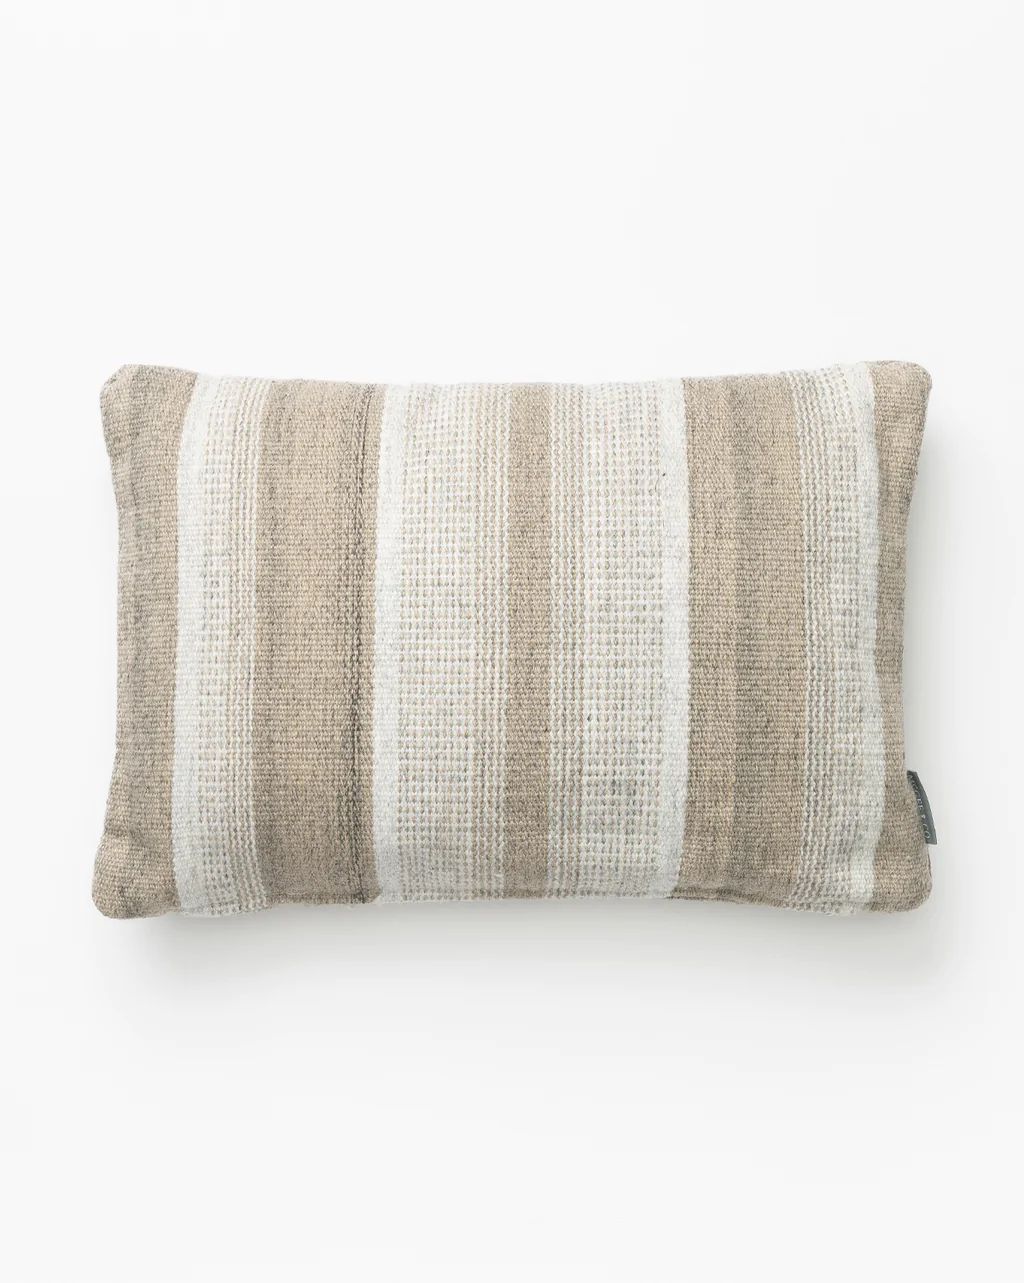 Lindley Indoor/Outdoor Pillow | McGee & Co.